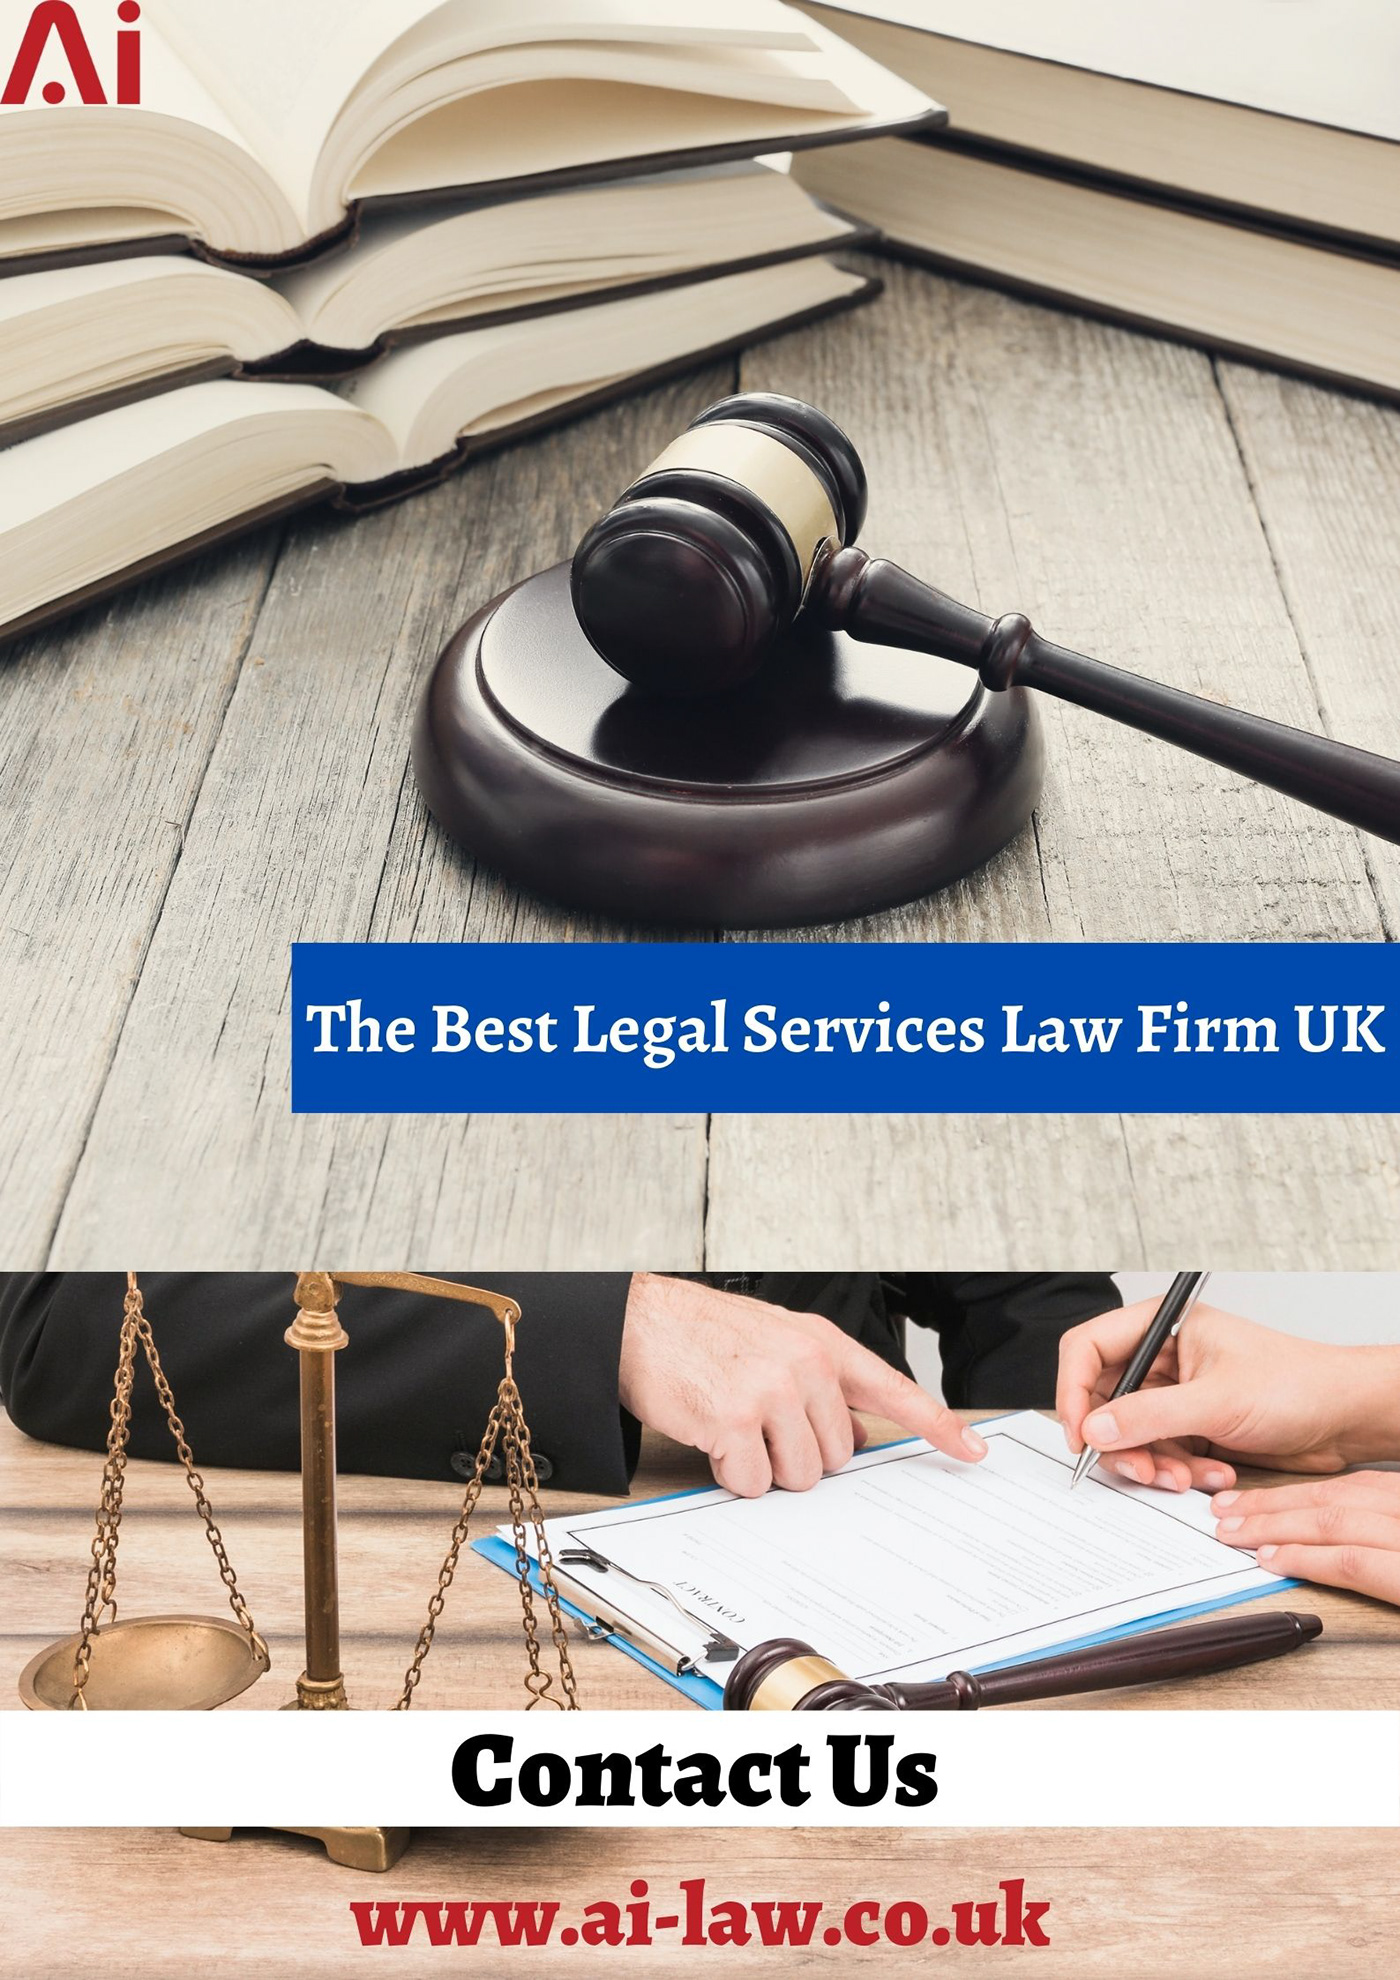 #Ai-LAW #best #firm #law #legal #services #UK